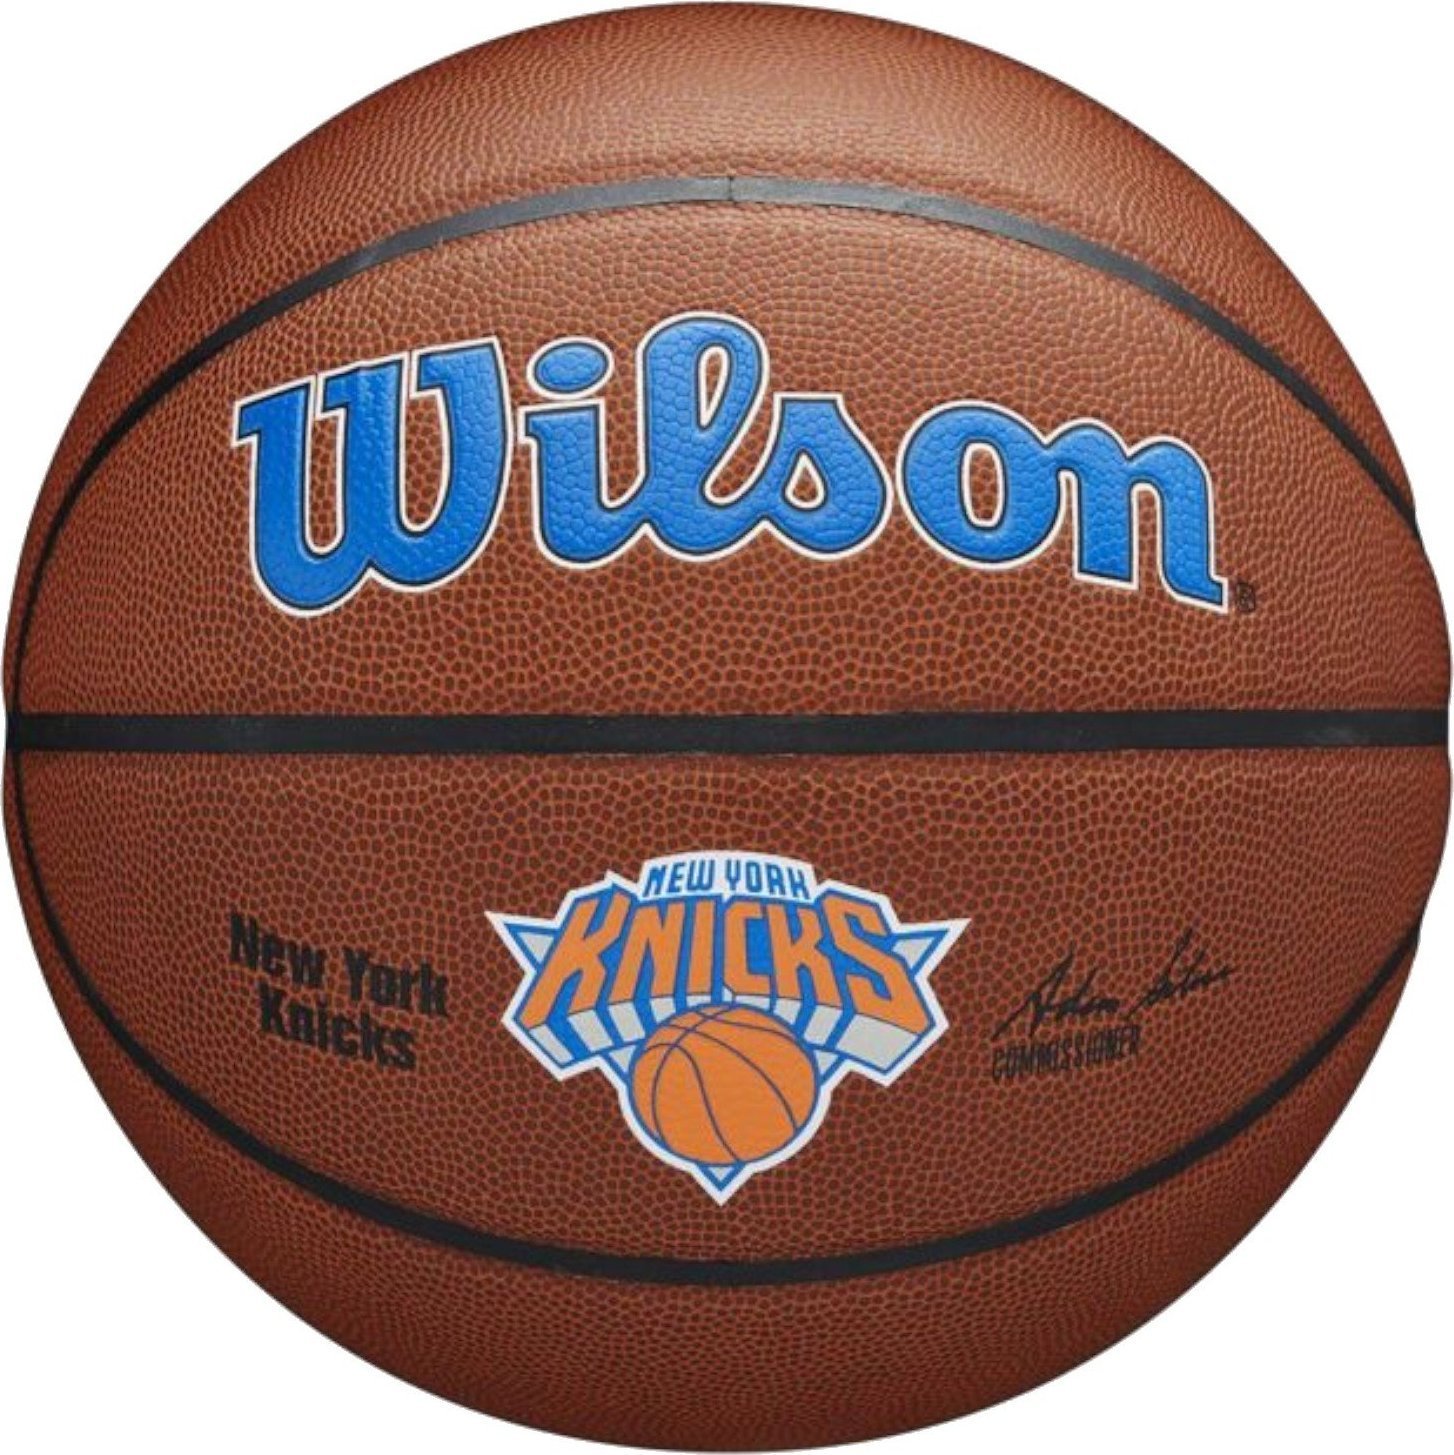 Minge baschet Wilson Nba Team Alliance New York Knicks, marime 7